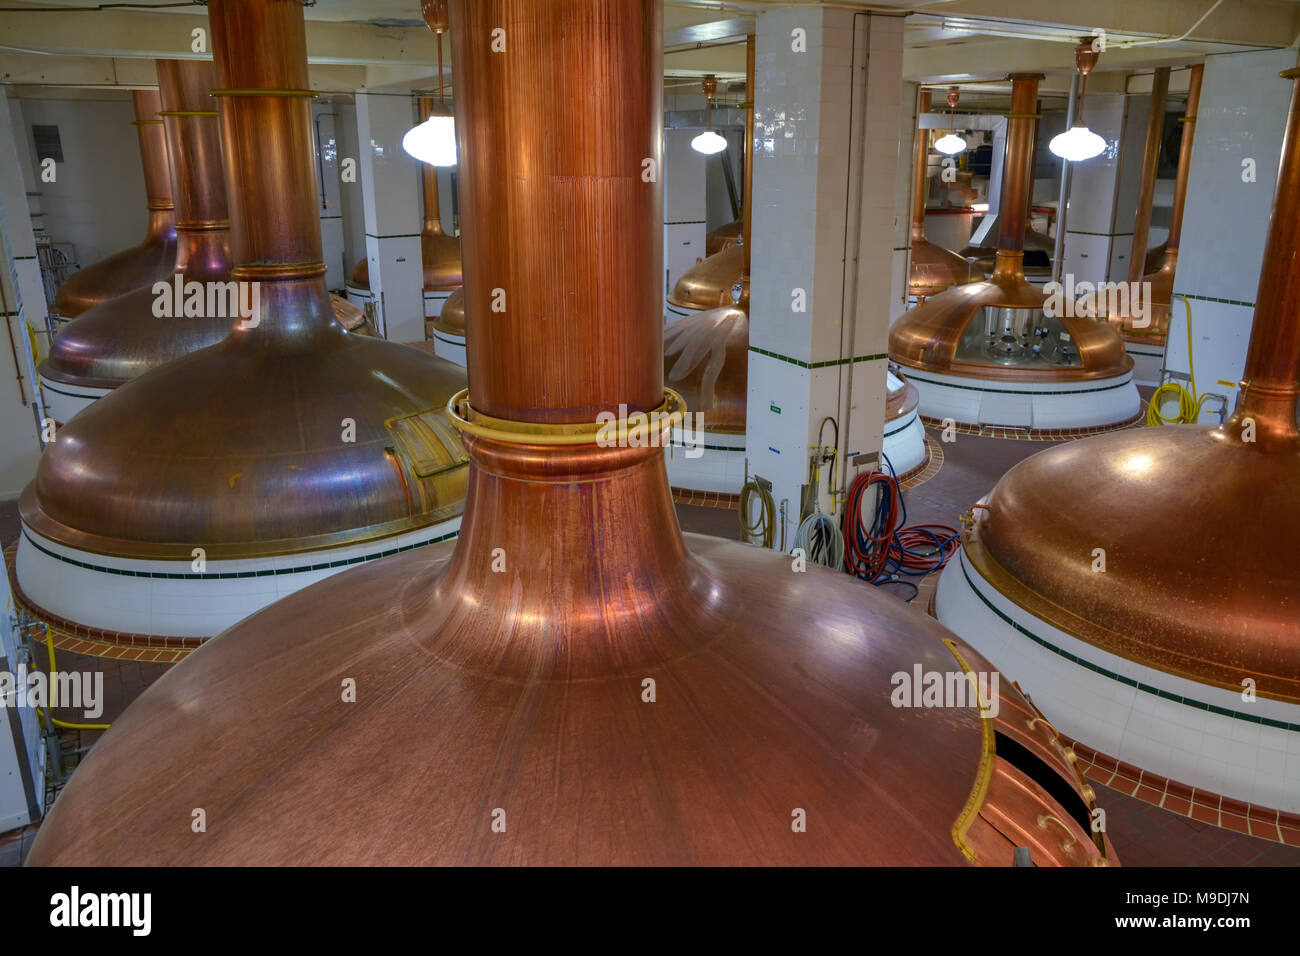 https://c8.alamy.com/comp/M9DJ7N/large-copper-pots-used-in-the-process-of-making-beer-M9DJ7N.jpg